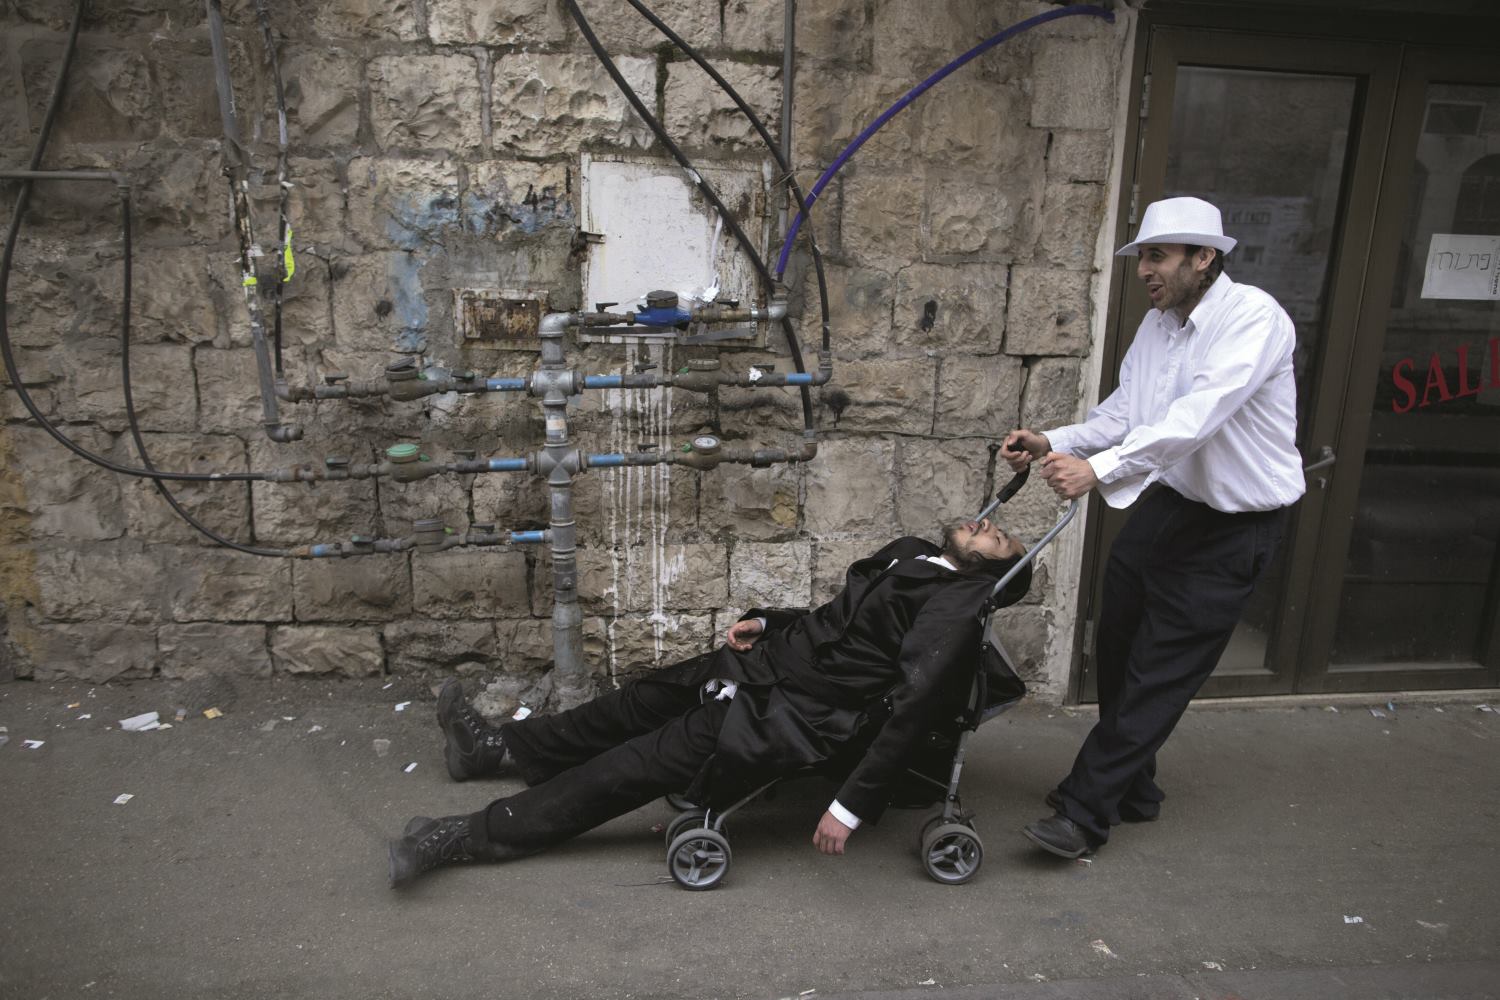 Lior Mizrahi/Getty Images